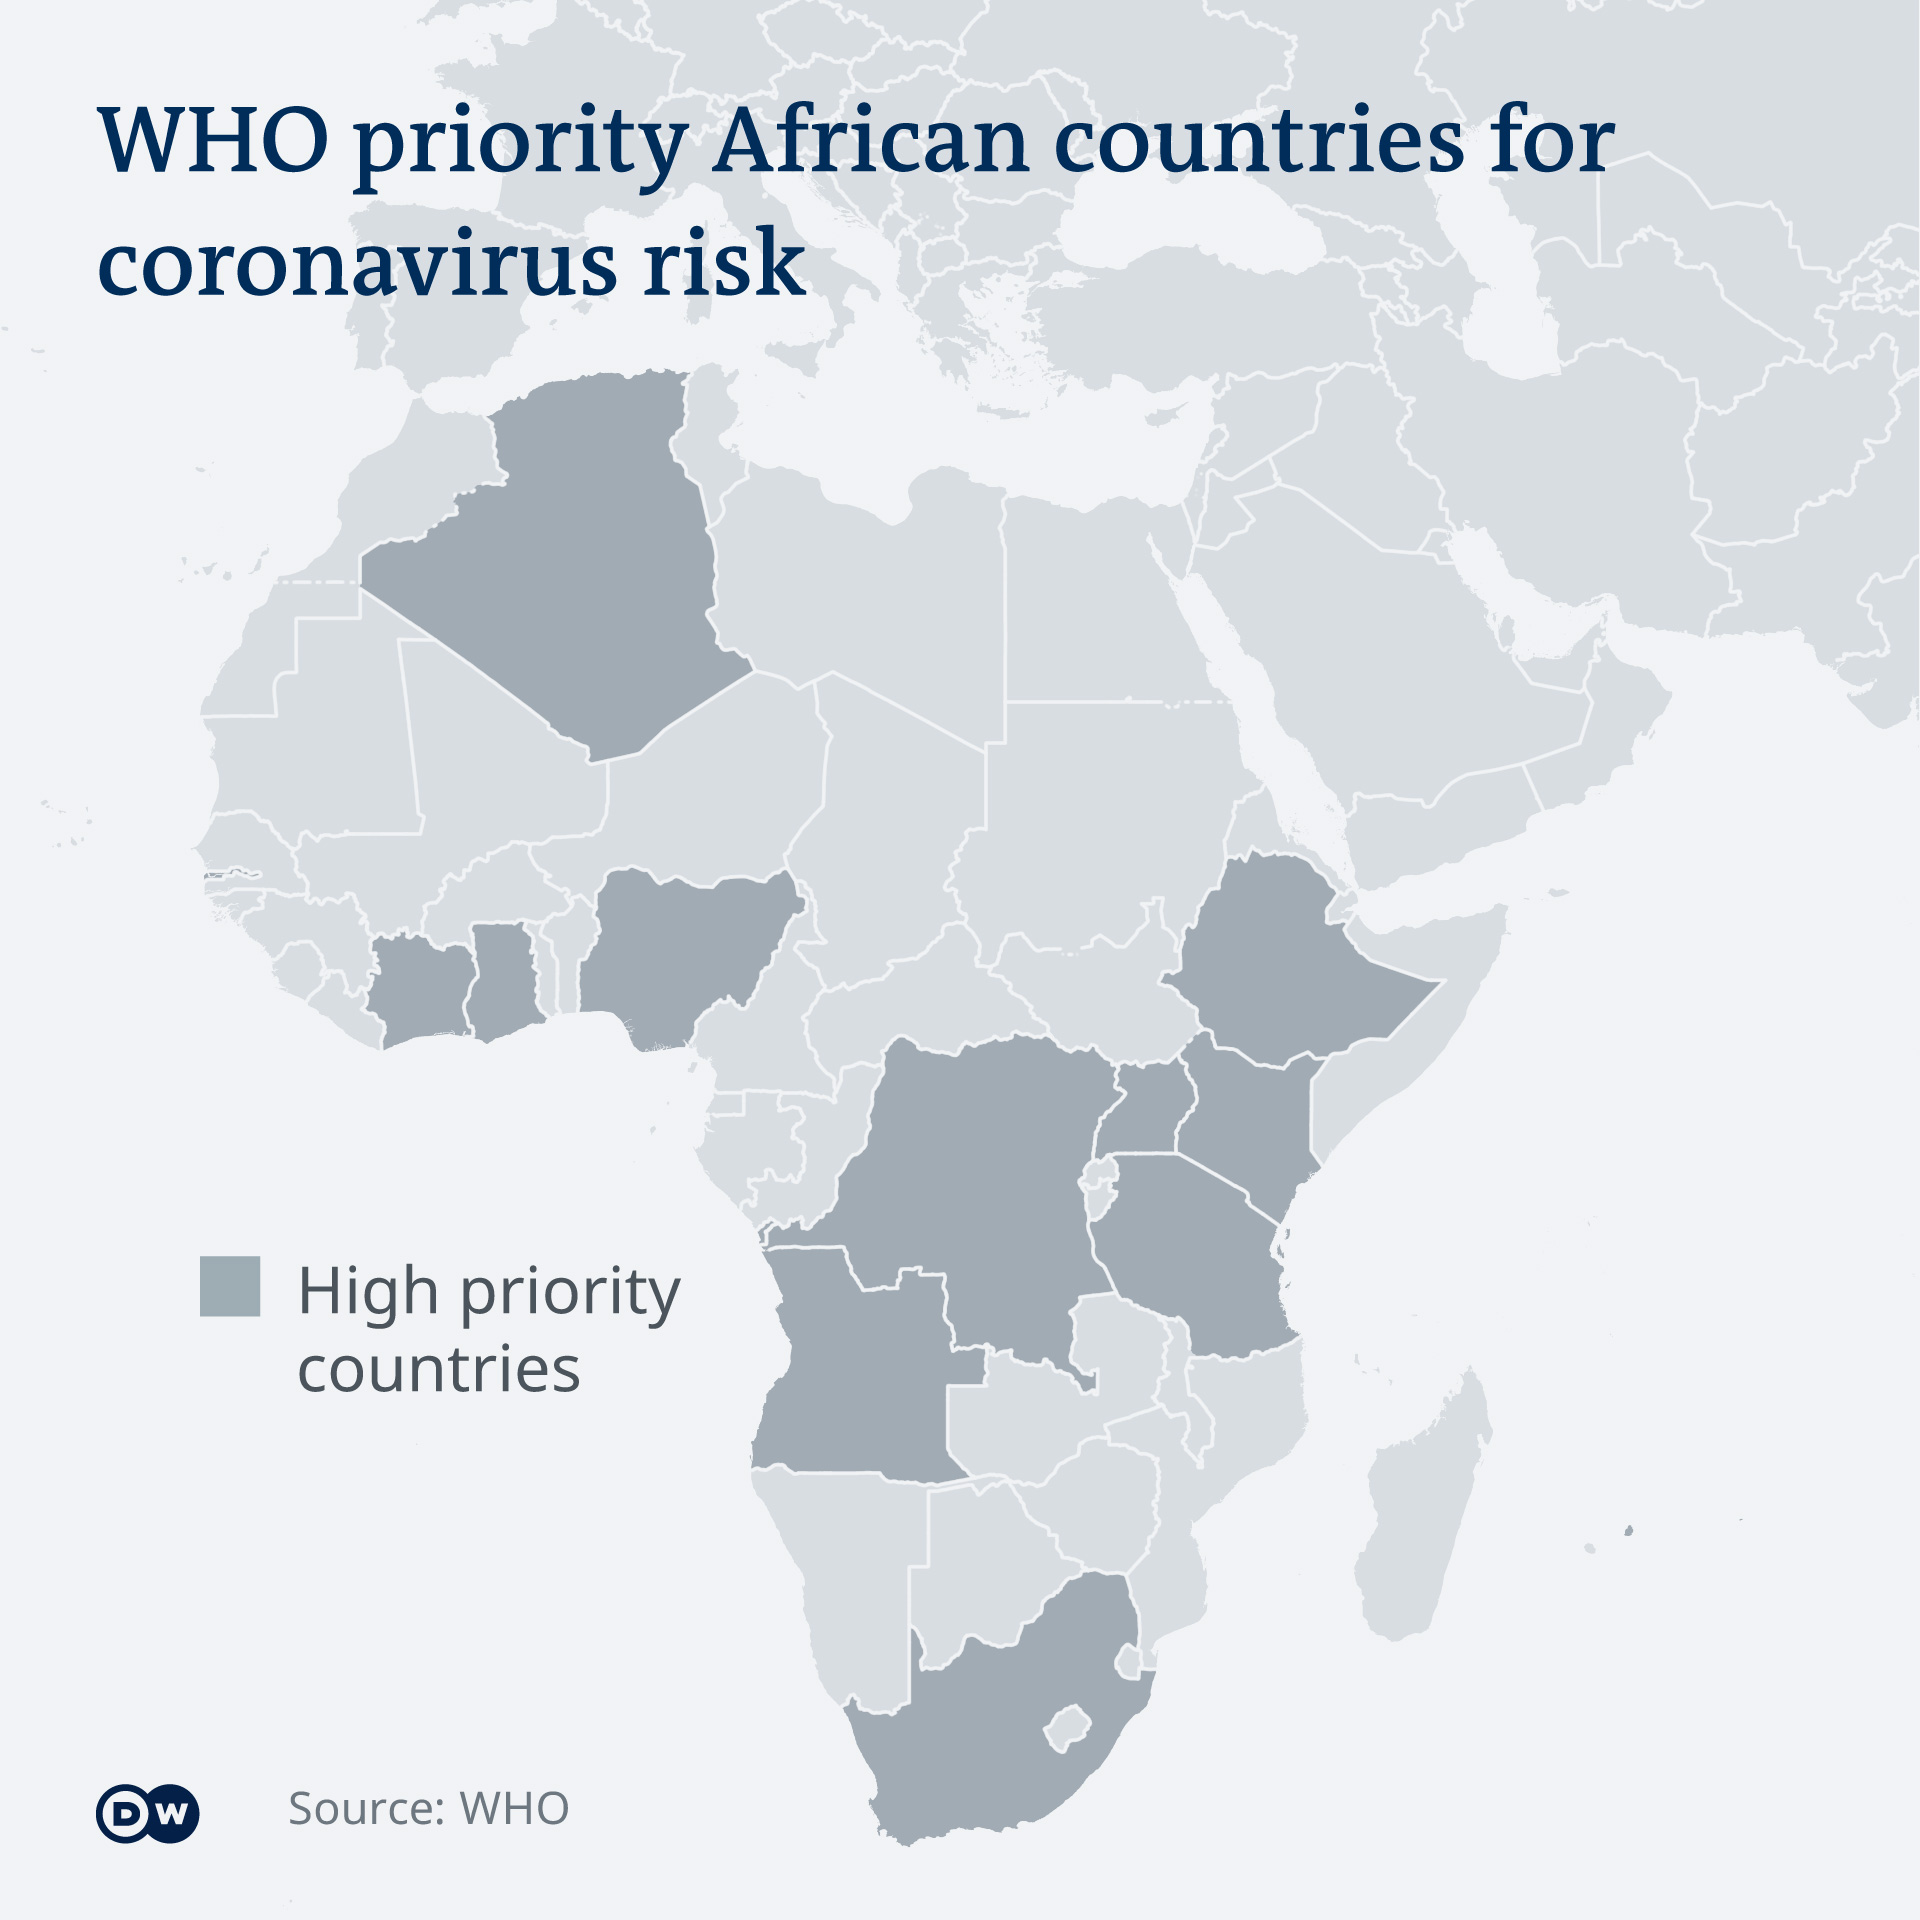 Map showing the 13 African countries prioritized by WHO for coronavirus: Algeria, Angola, Ivory Coast, Democratic Republic of the Congo, Ethiopia, Ghana, Kenya, Mauritius, Nigeria, South Africa, Tanzania, Uganda and Zambia